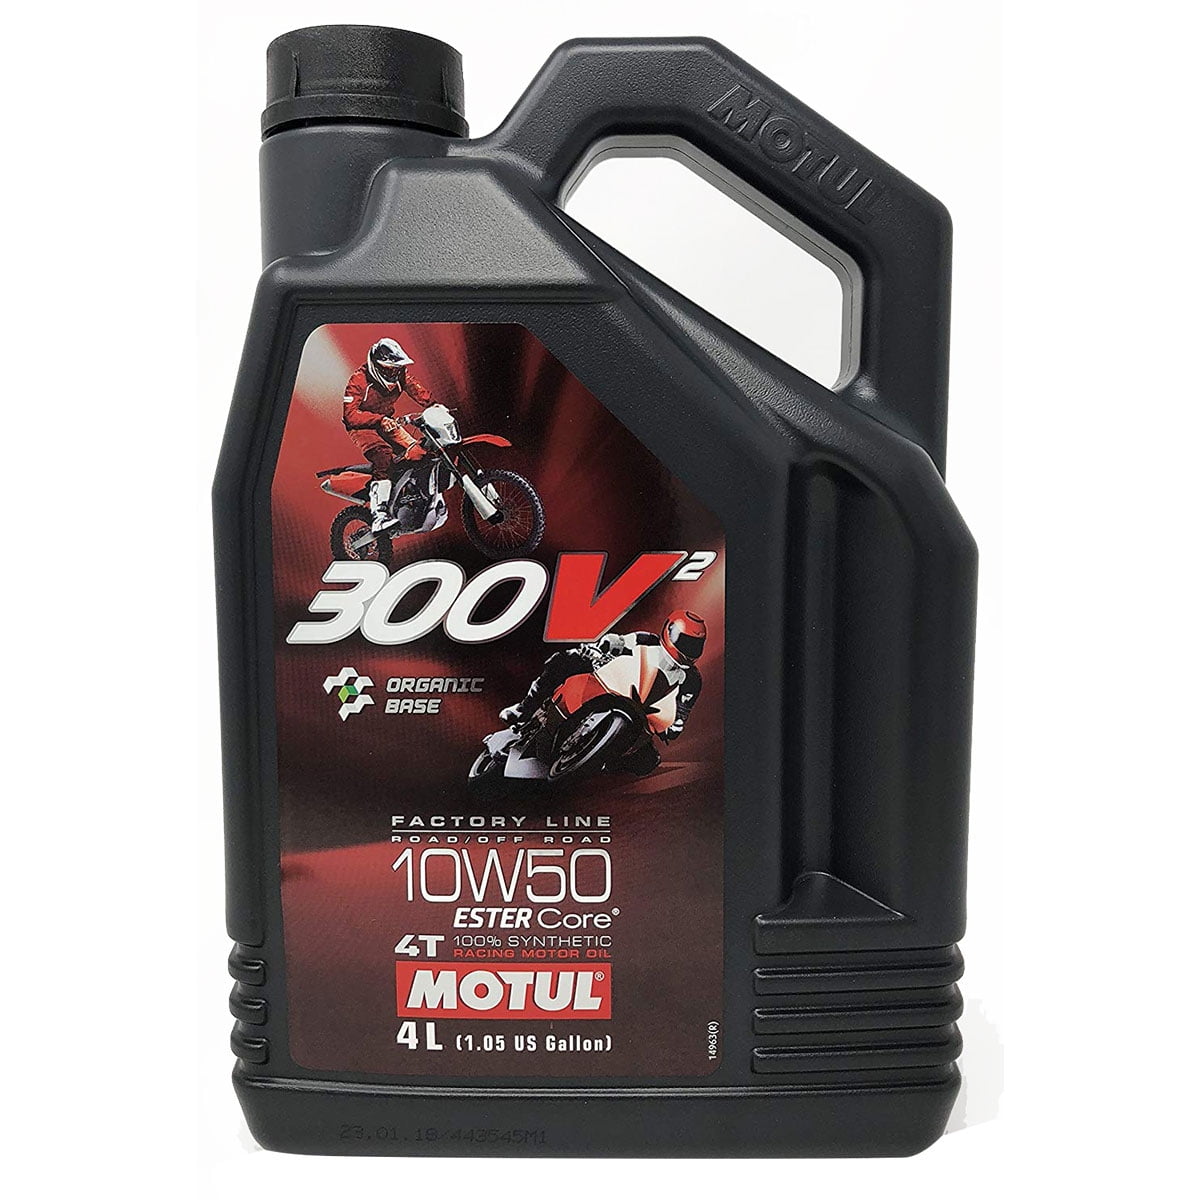 Motul Factory Line 300v2 4t %100 Full Synthetic Racing Motor Oil - 10w50 -  4 Liter Jug 